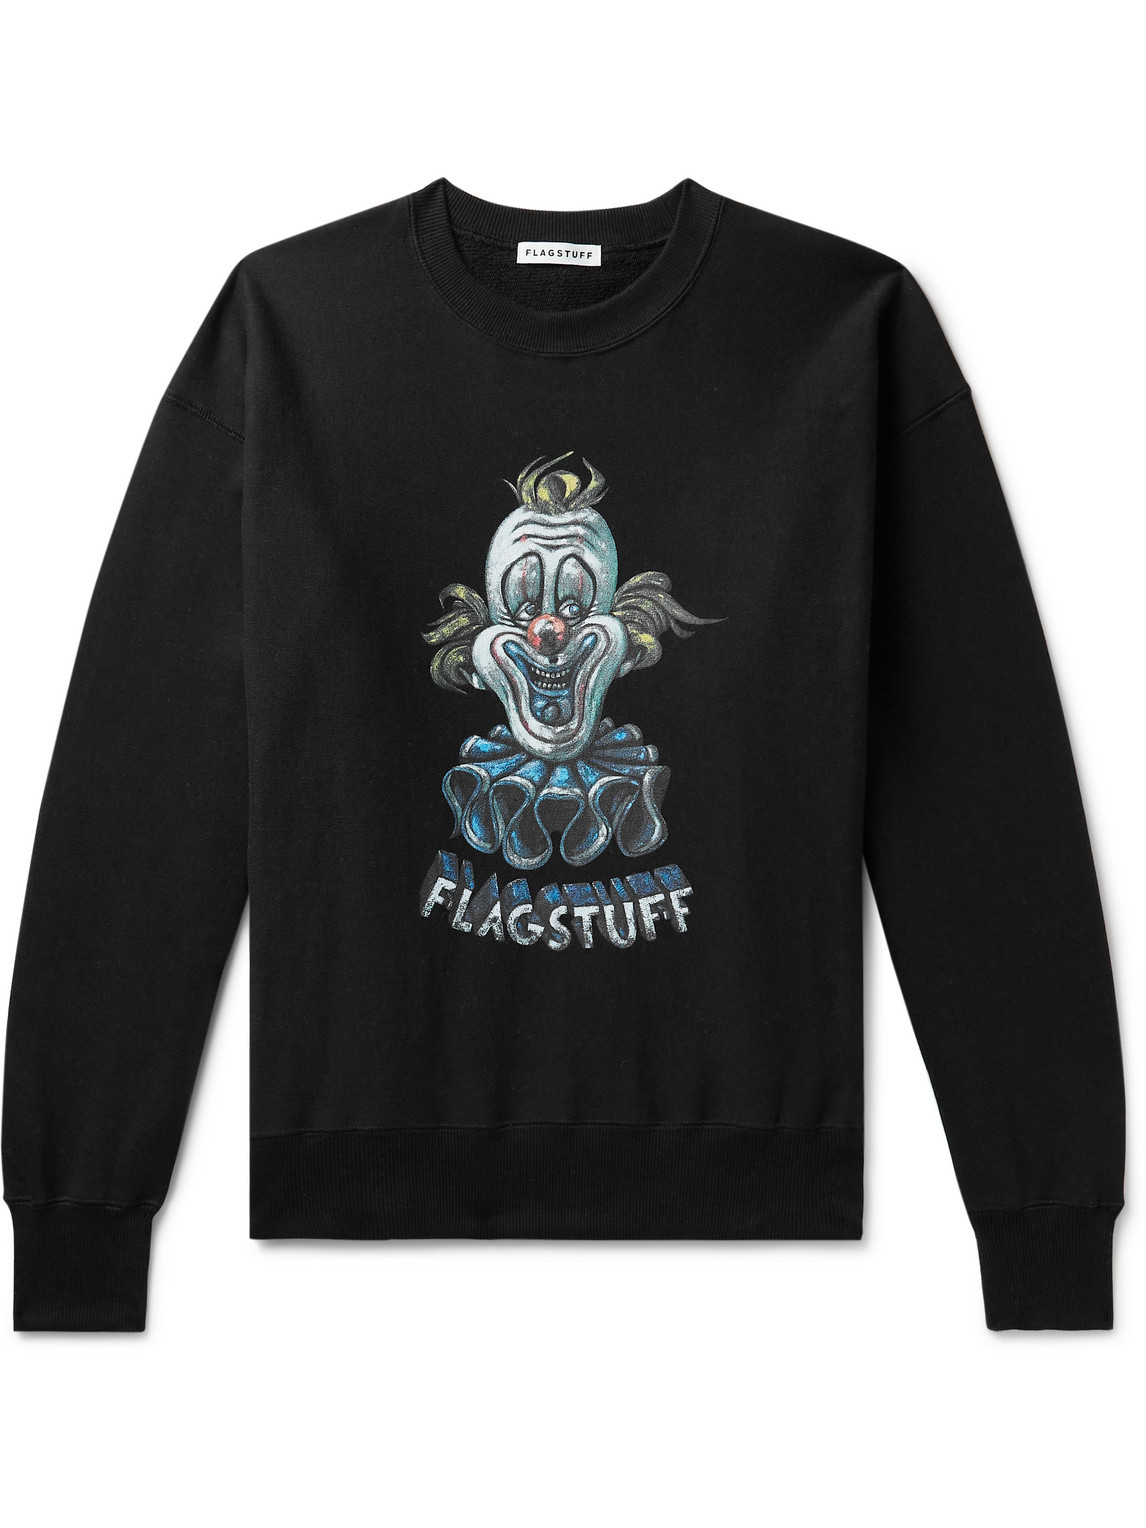 Flagstuff Printed Cotton-Jersey Sweatshirt